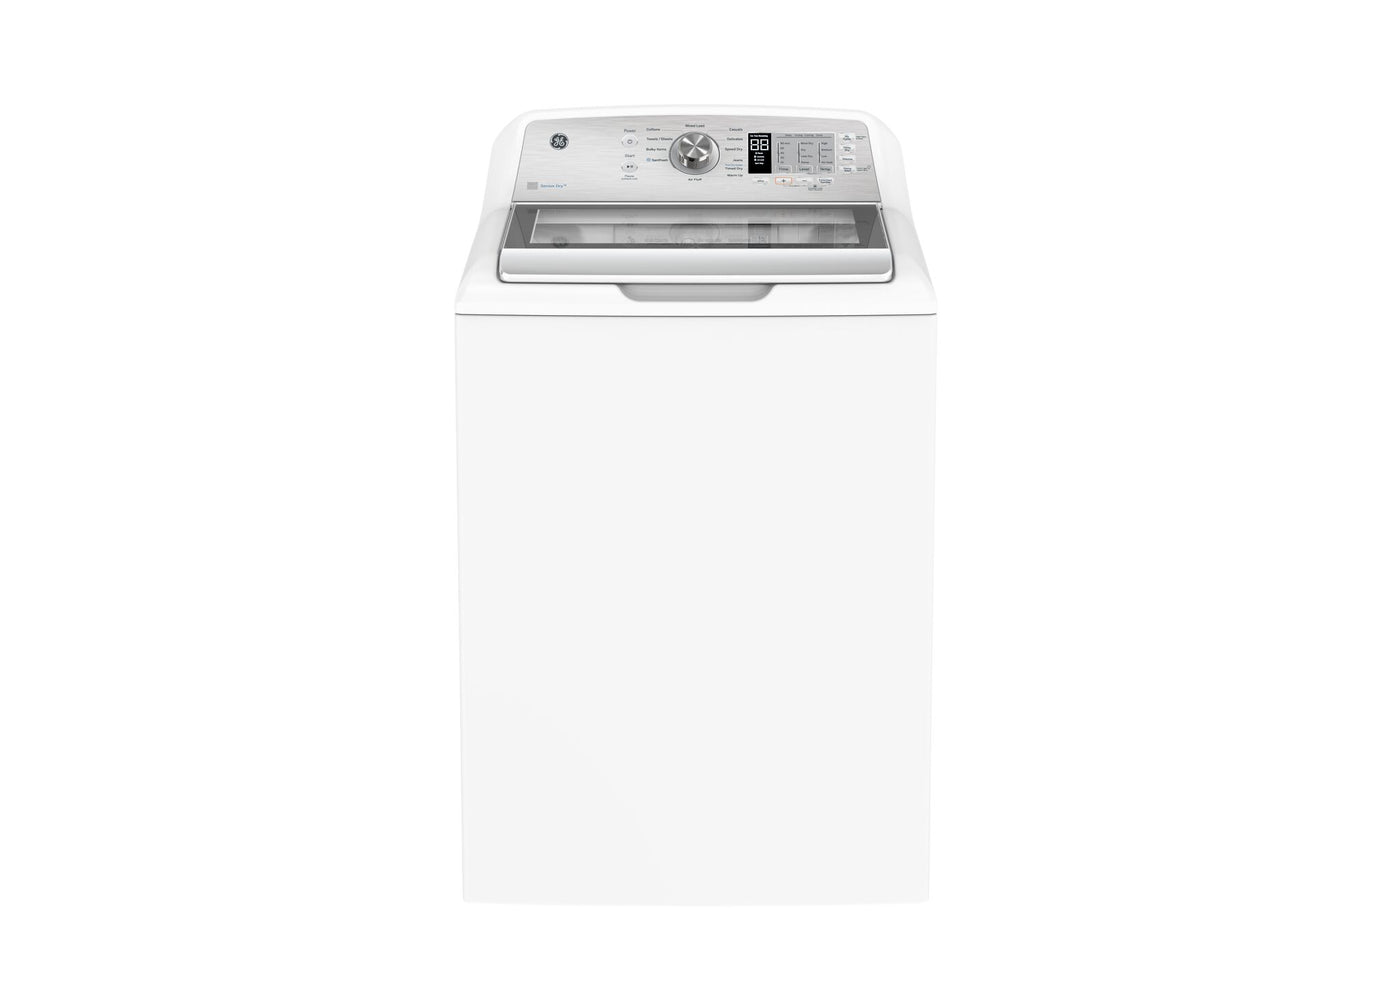 GE White Top-Load Washer (5.3 Cu. Ft.) & GE White Gas Dryer (7.4 Cu. Ft.) - GTW680BMRWS/GTD65GBMRWS